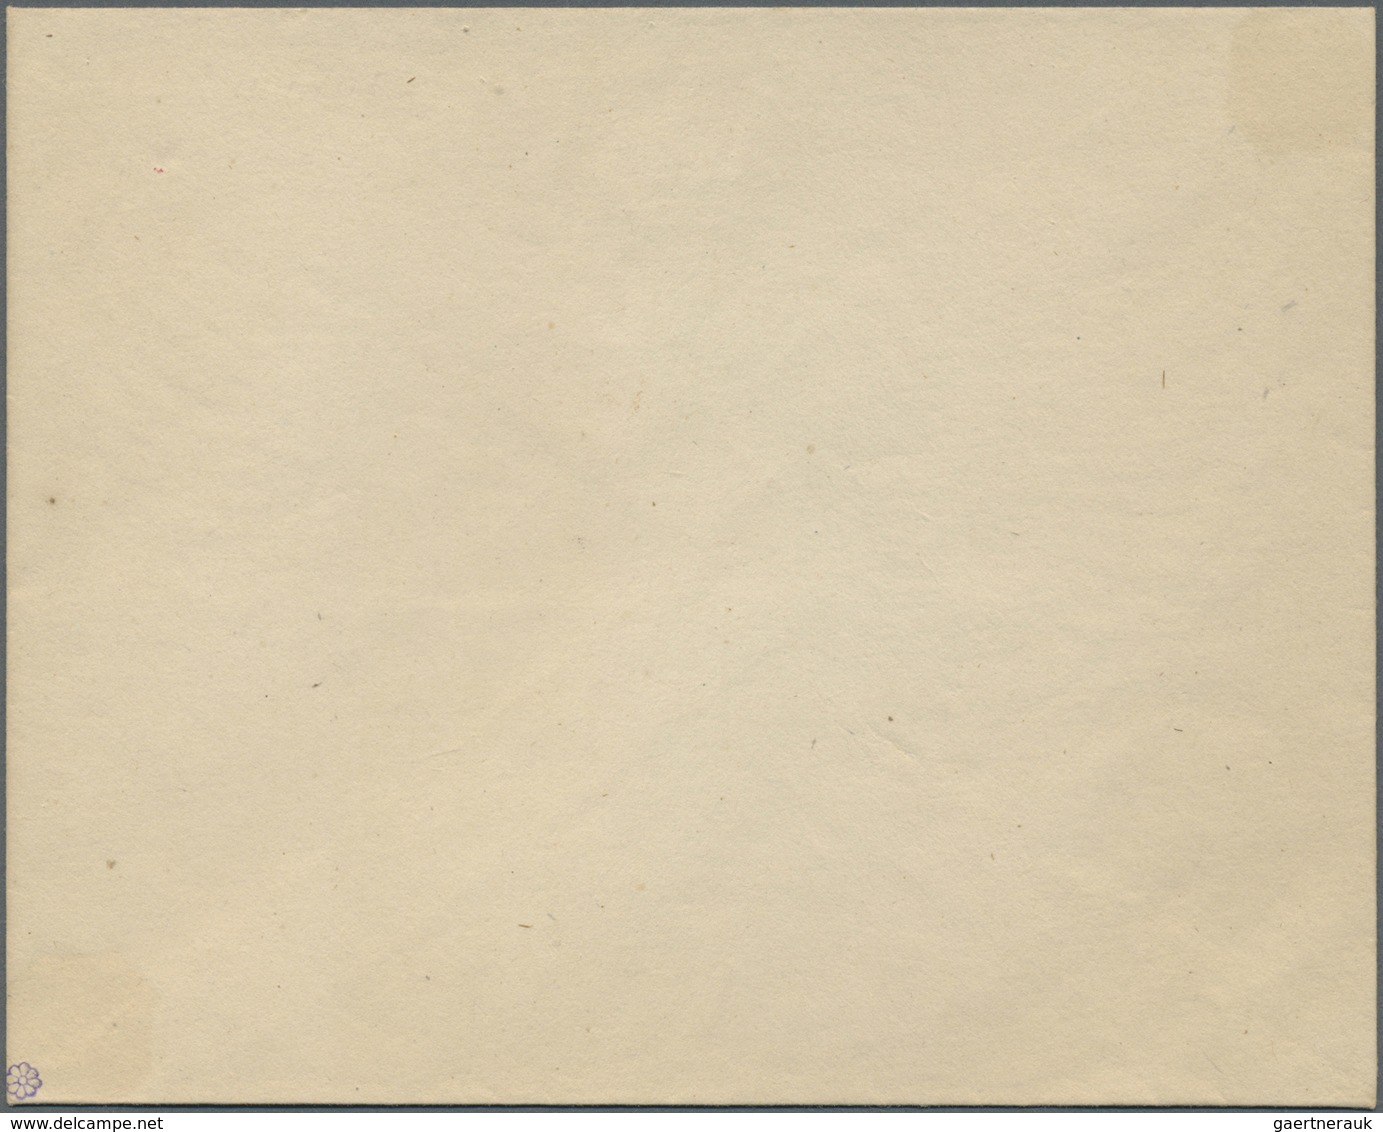 GA Russland - Ganzsachen: 1848, First Issue 30 + 1 K. Carmine Envelope, Unused, Slight Toned, Otherwise - Stamped Stationery